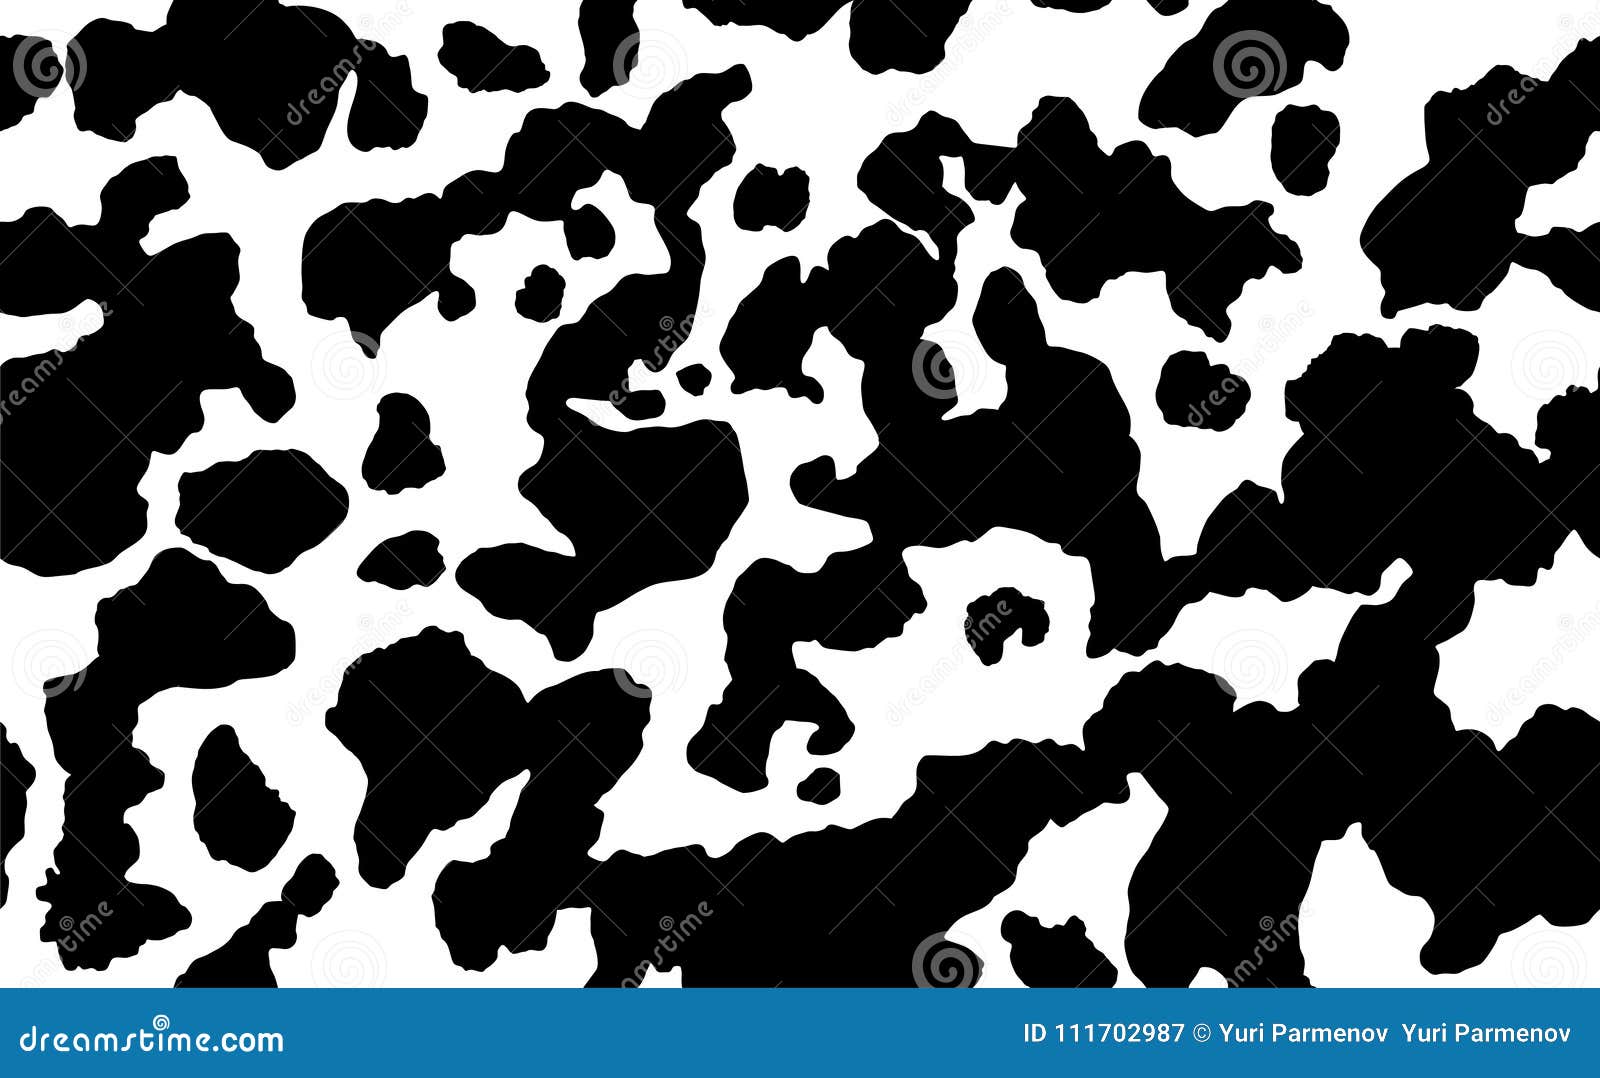 Black & White Cow Spots Animal Print Pattern Wrapping Paper